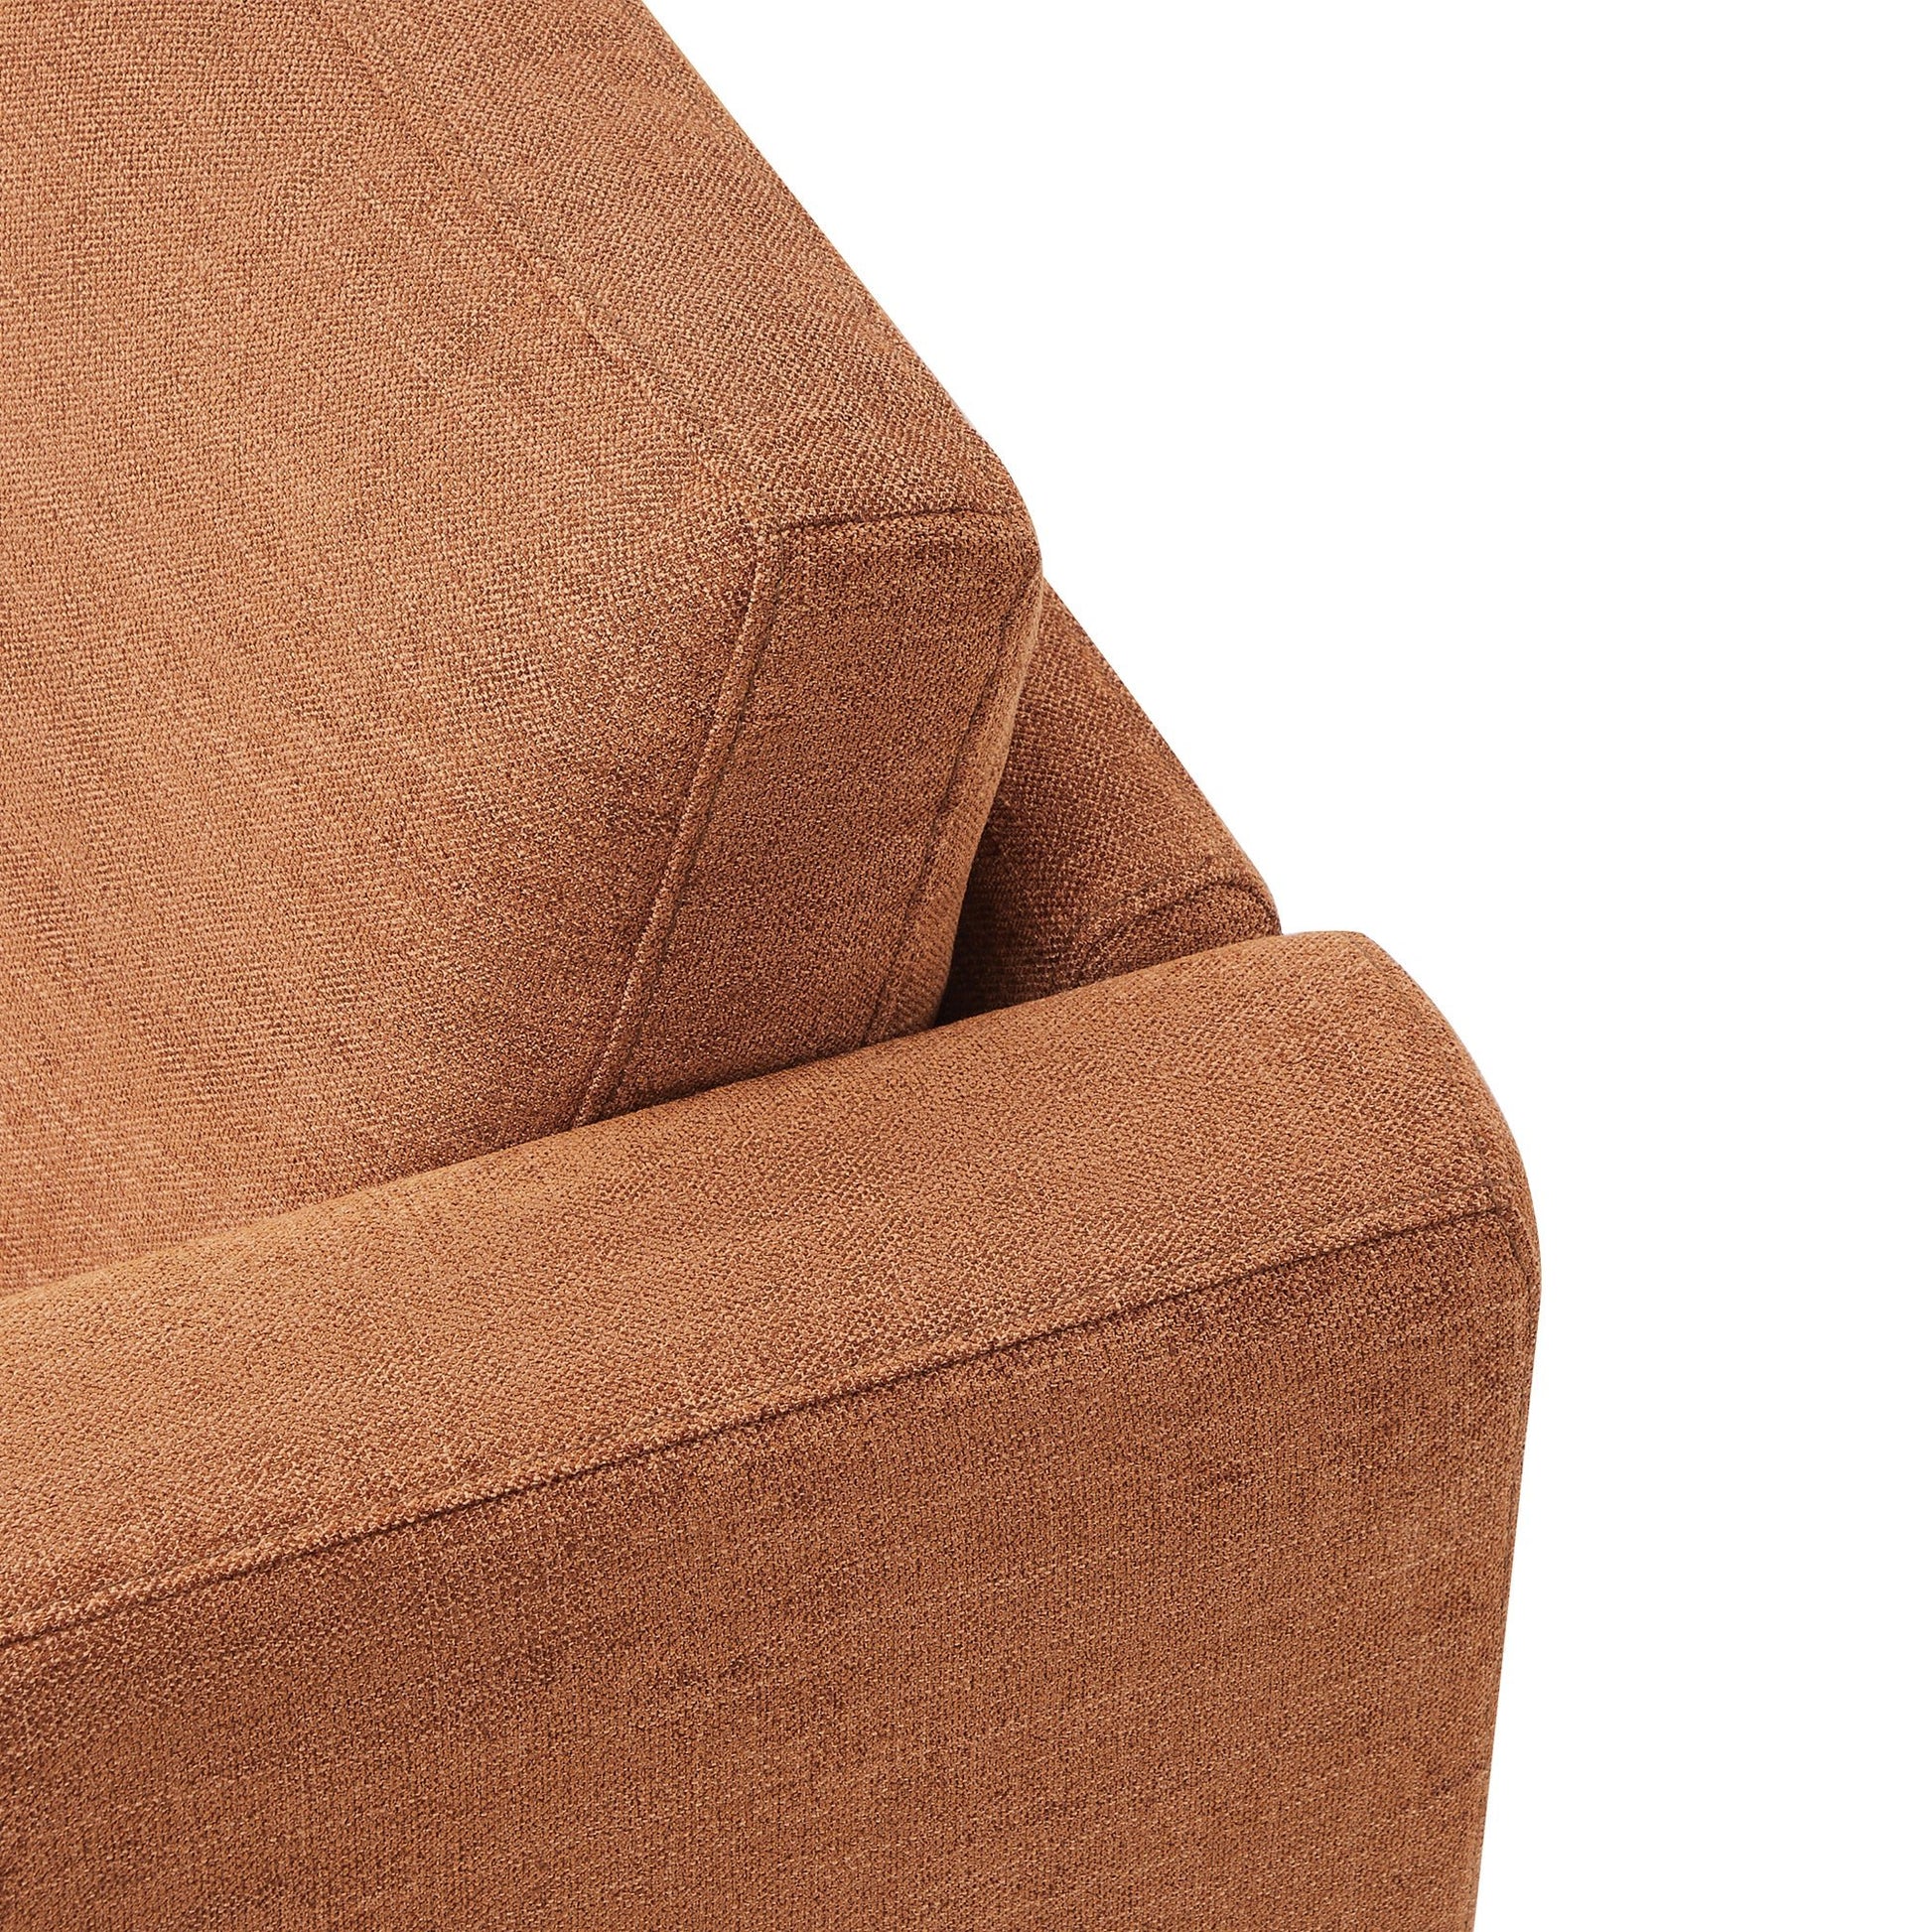 CHITA LIVING-Delaney 2-Piece Modular Sofa (78'')-Sofas-Fabric-Terracotta-